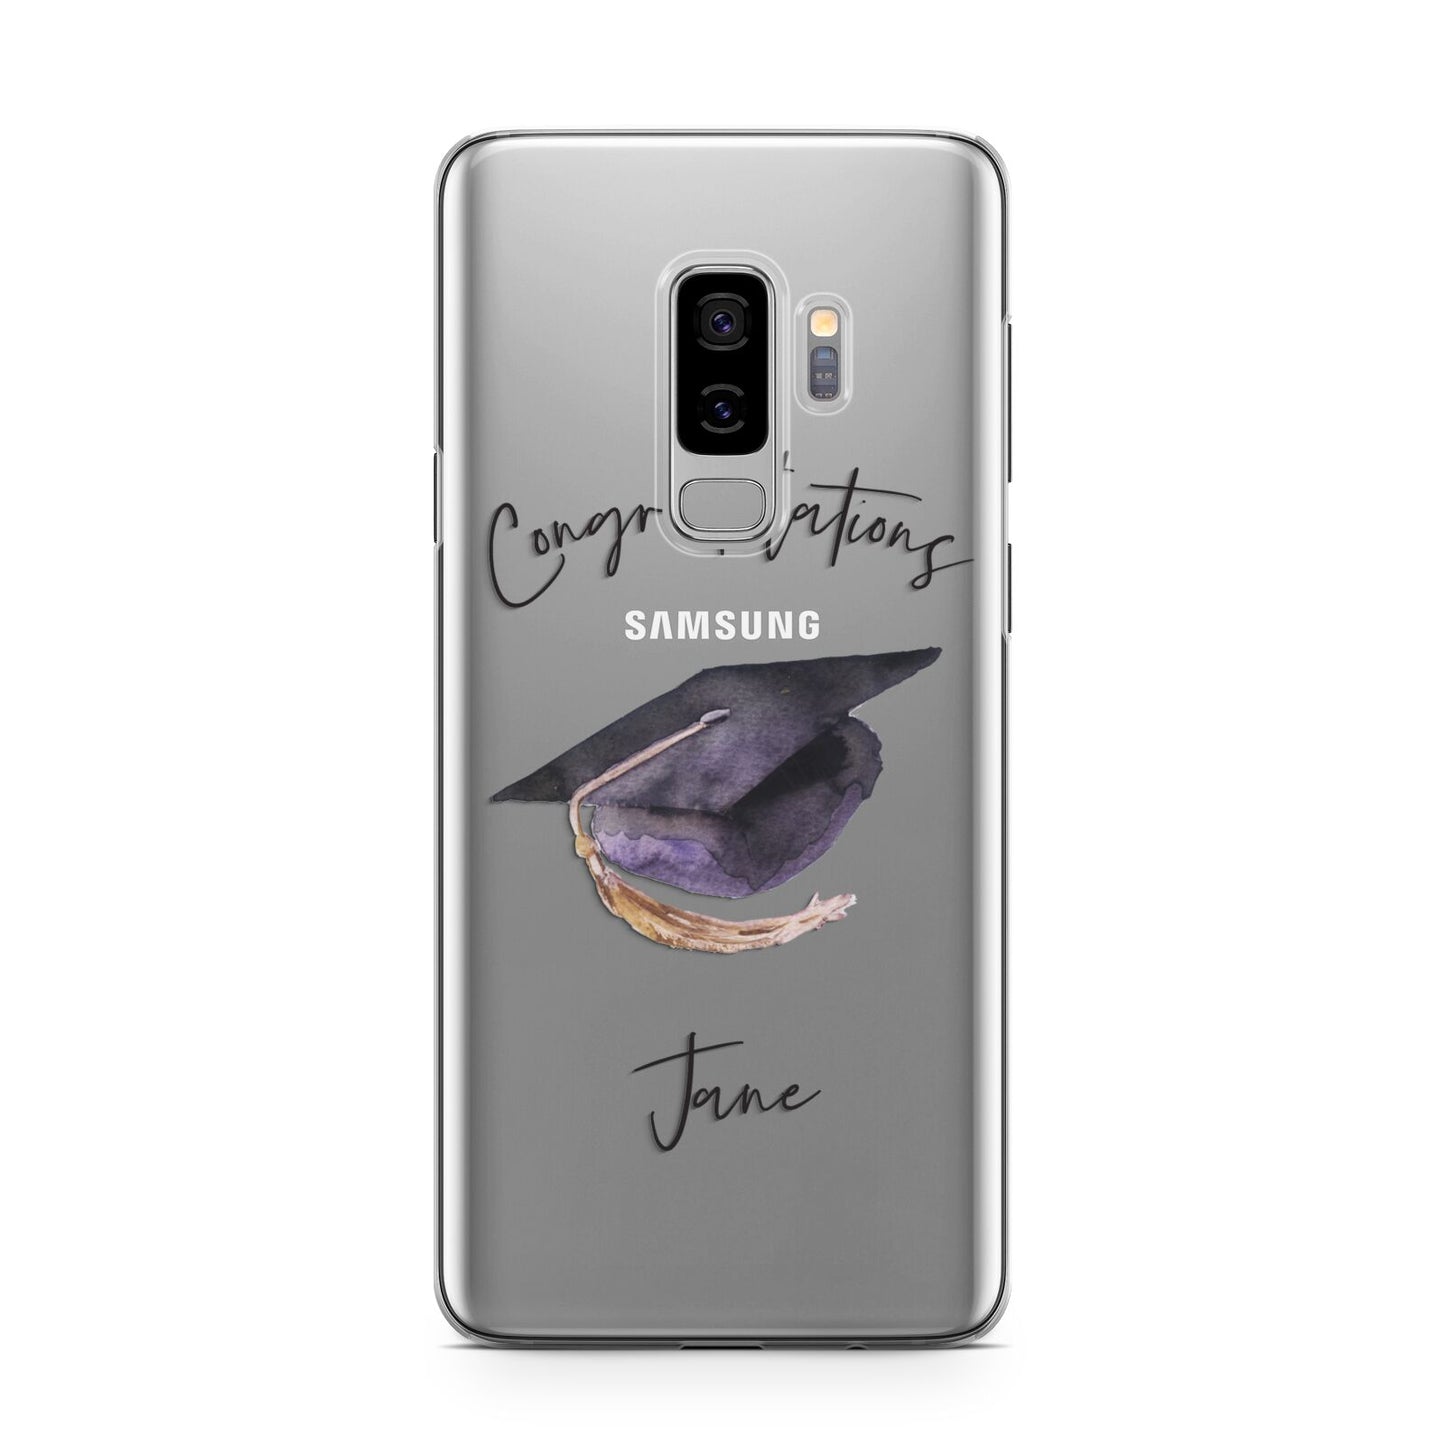 Congratulations Graduate Custom Samsung Galaxy S9 Plus Case on Silver phone